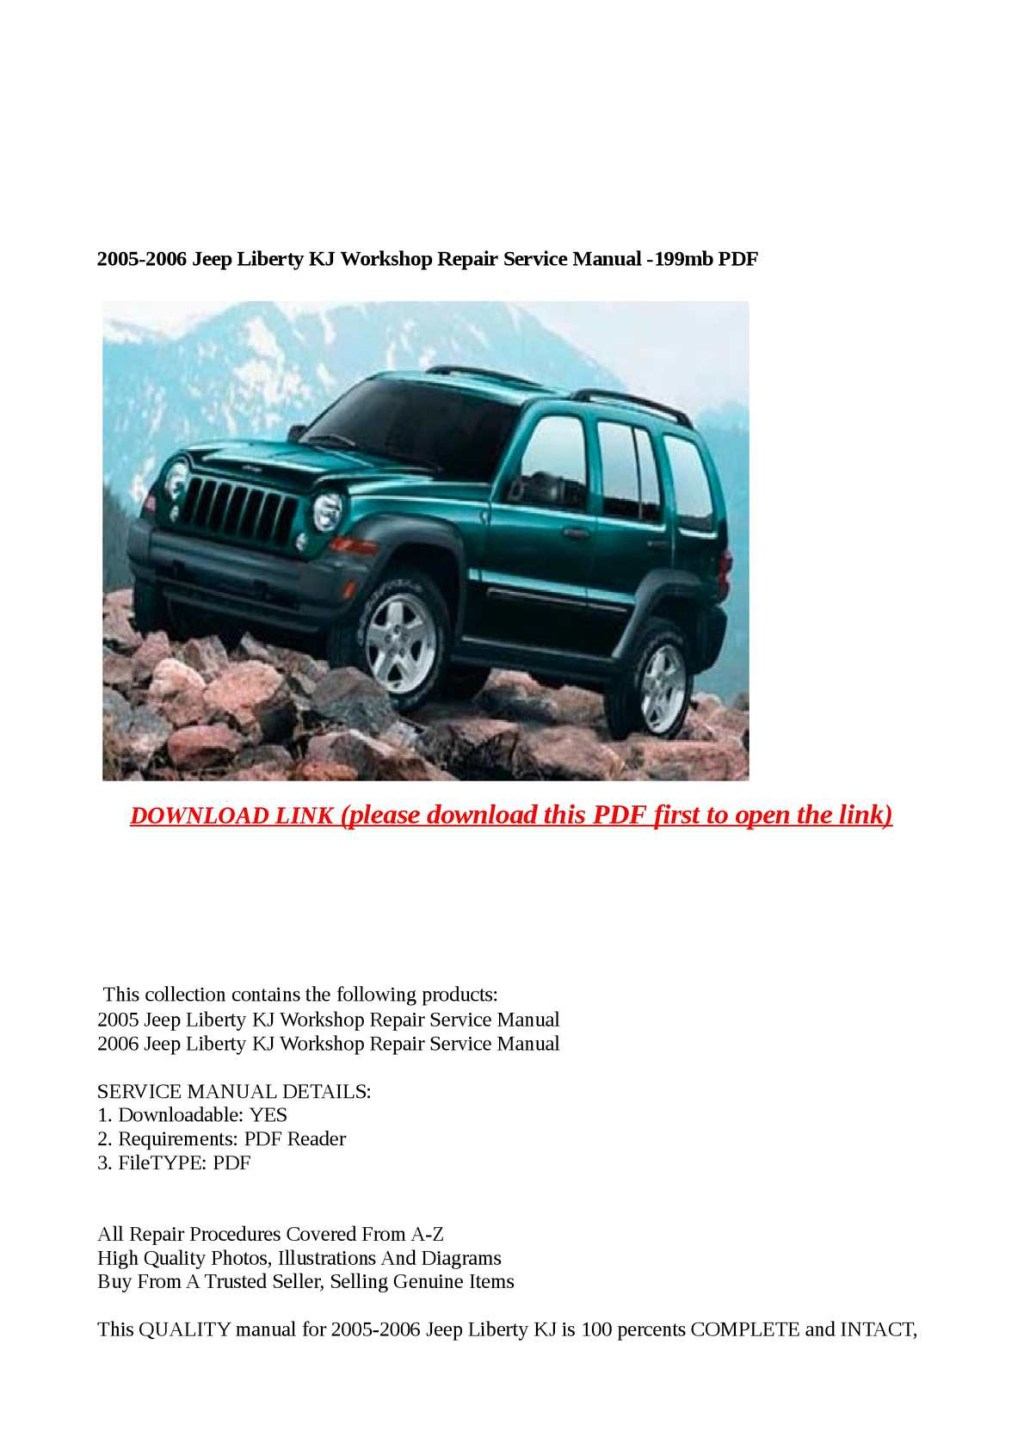 Picture of: Calaméo – – Jeep Liberty KJ Workshop Repair Service Manual